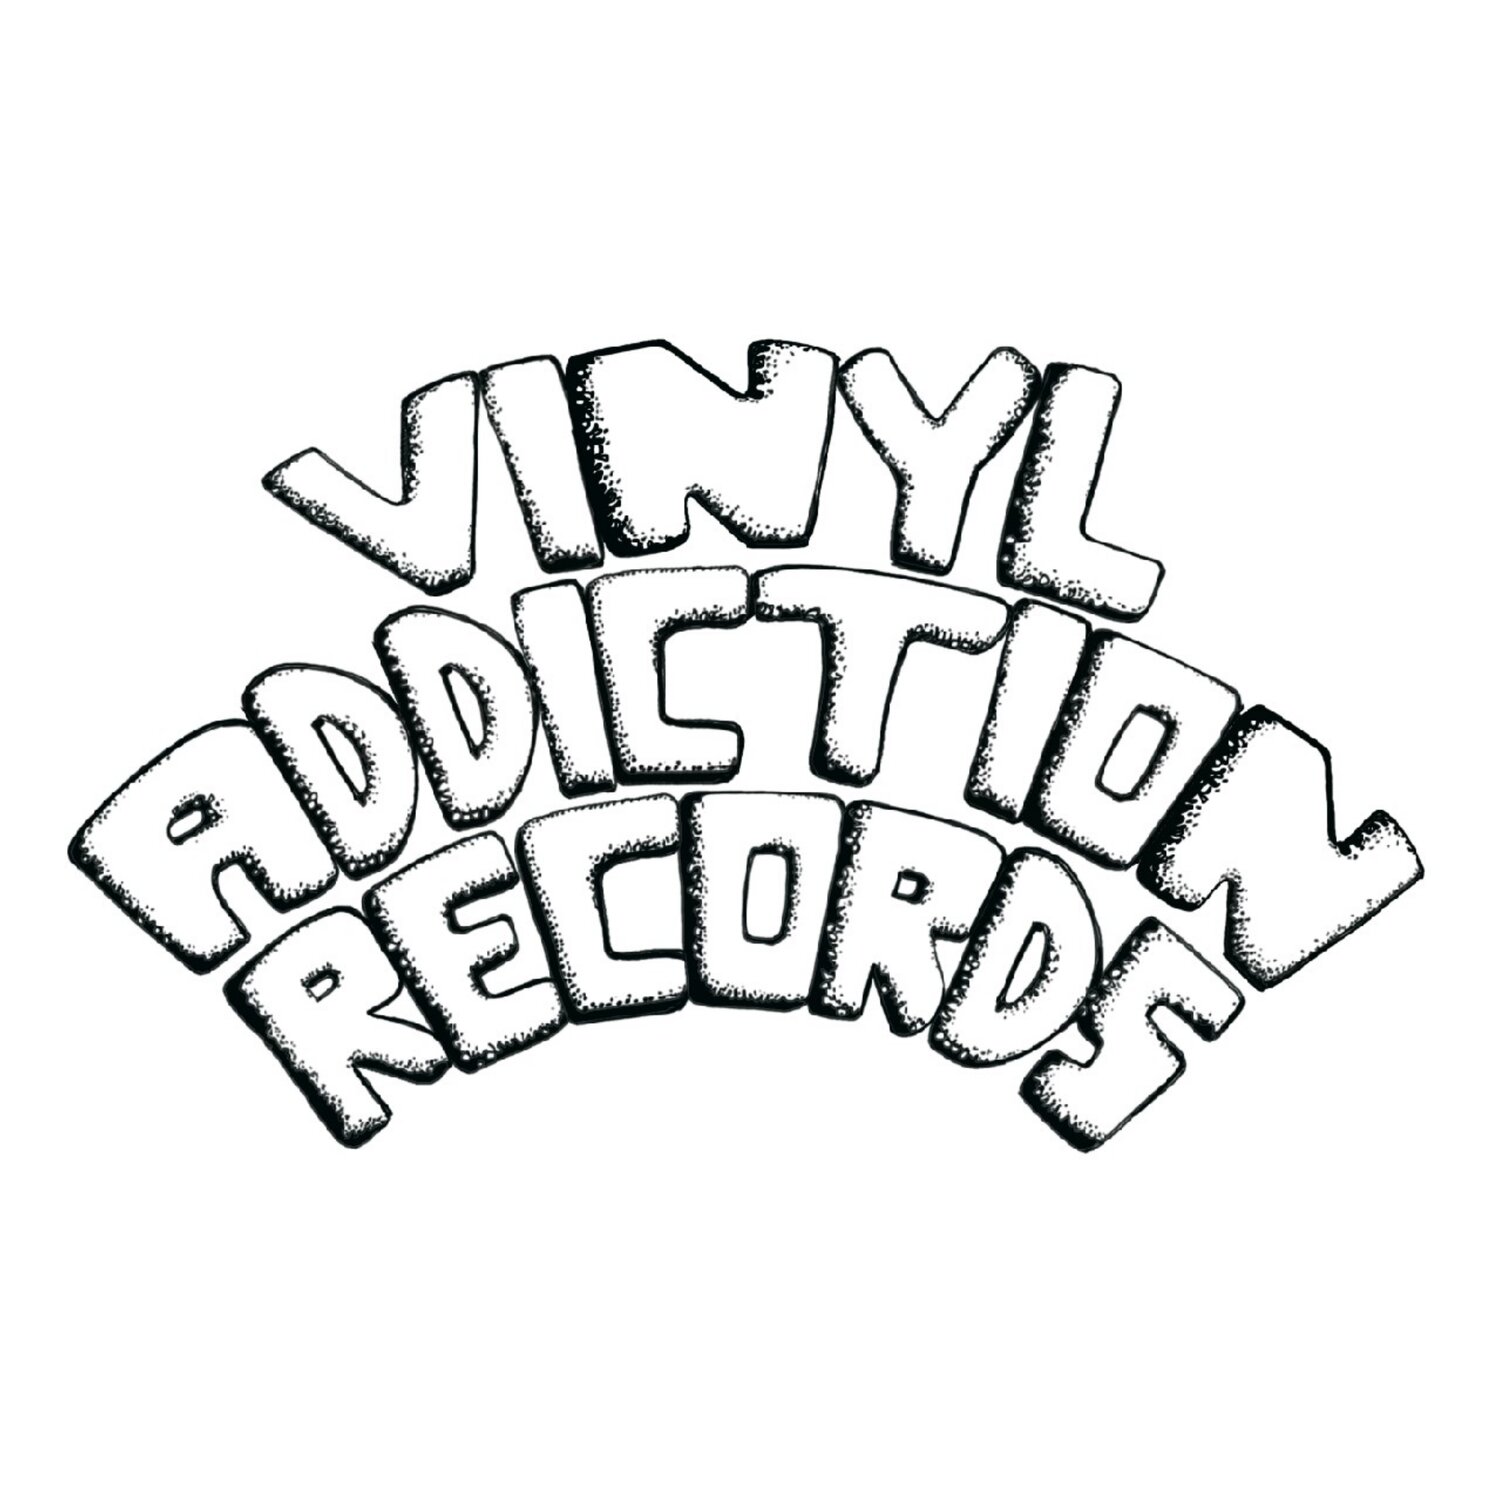 Vinyl Addiction Records